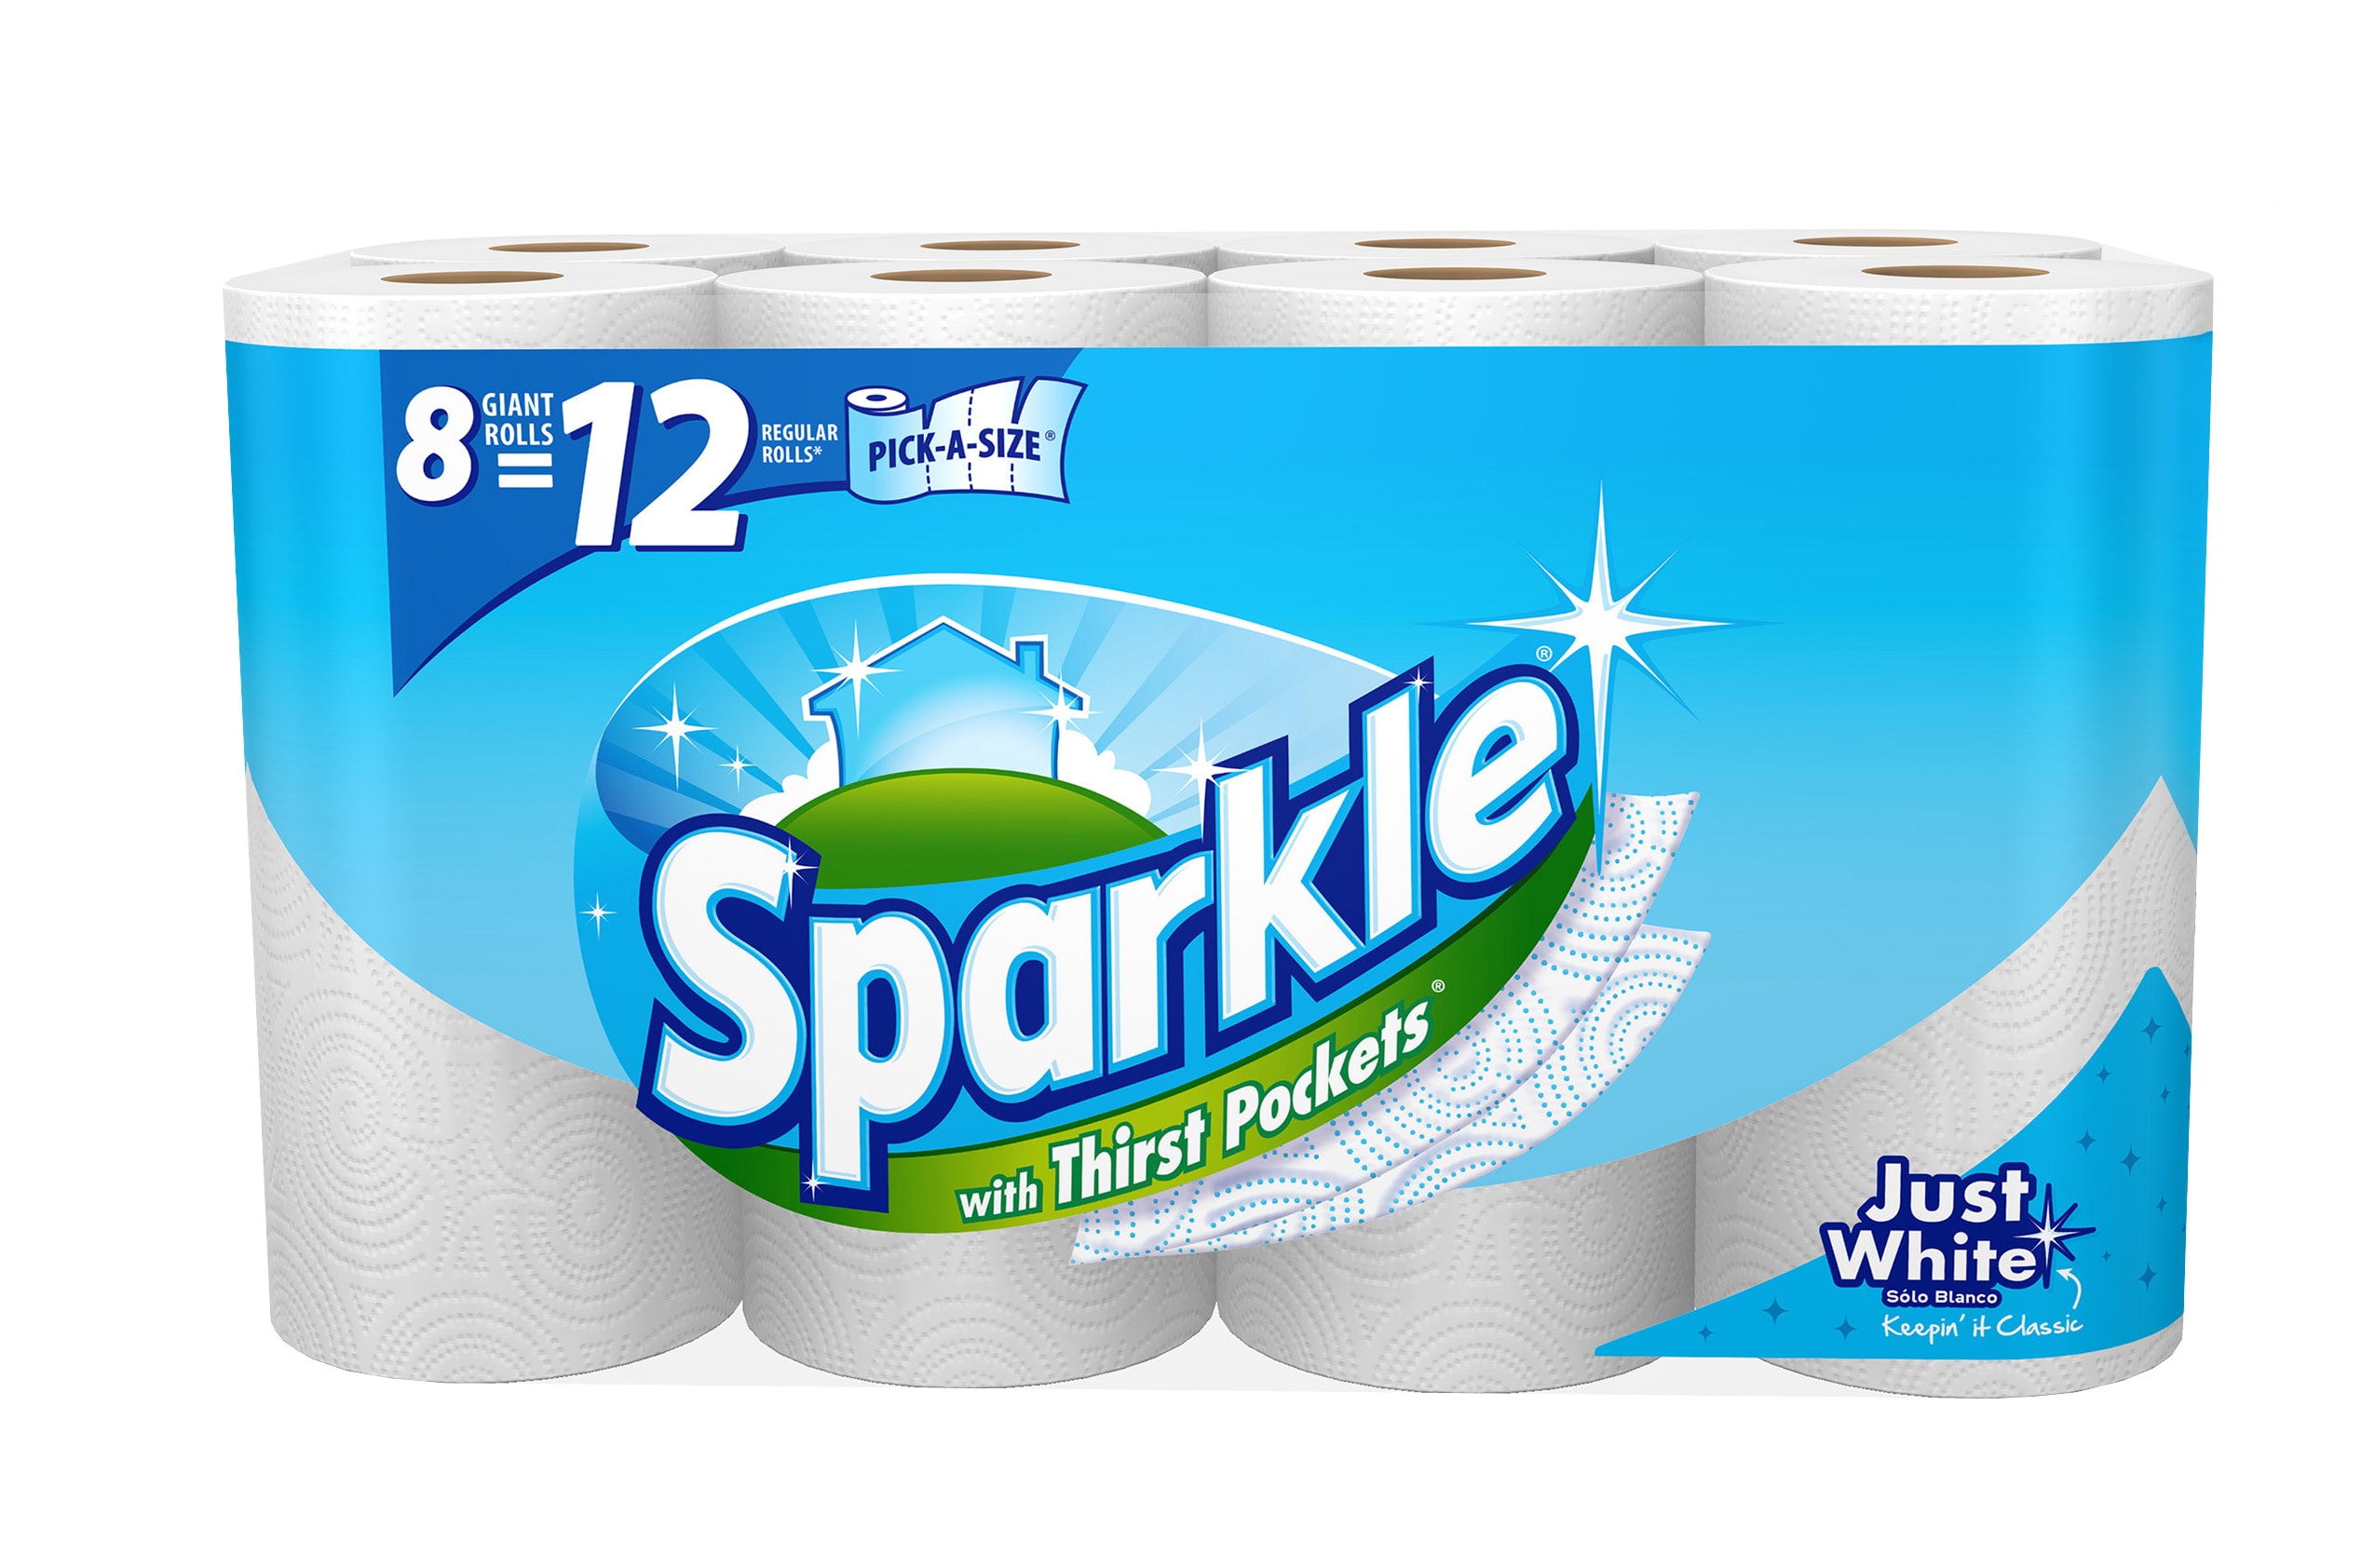 sparkle brand paper towels